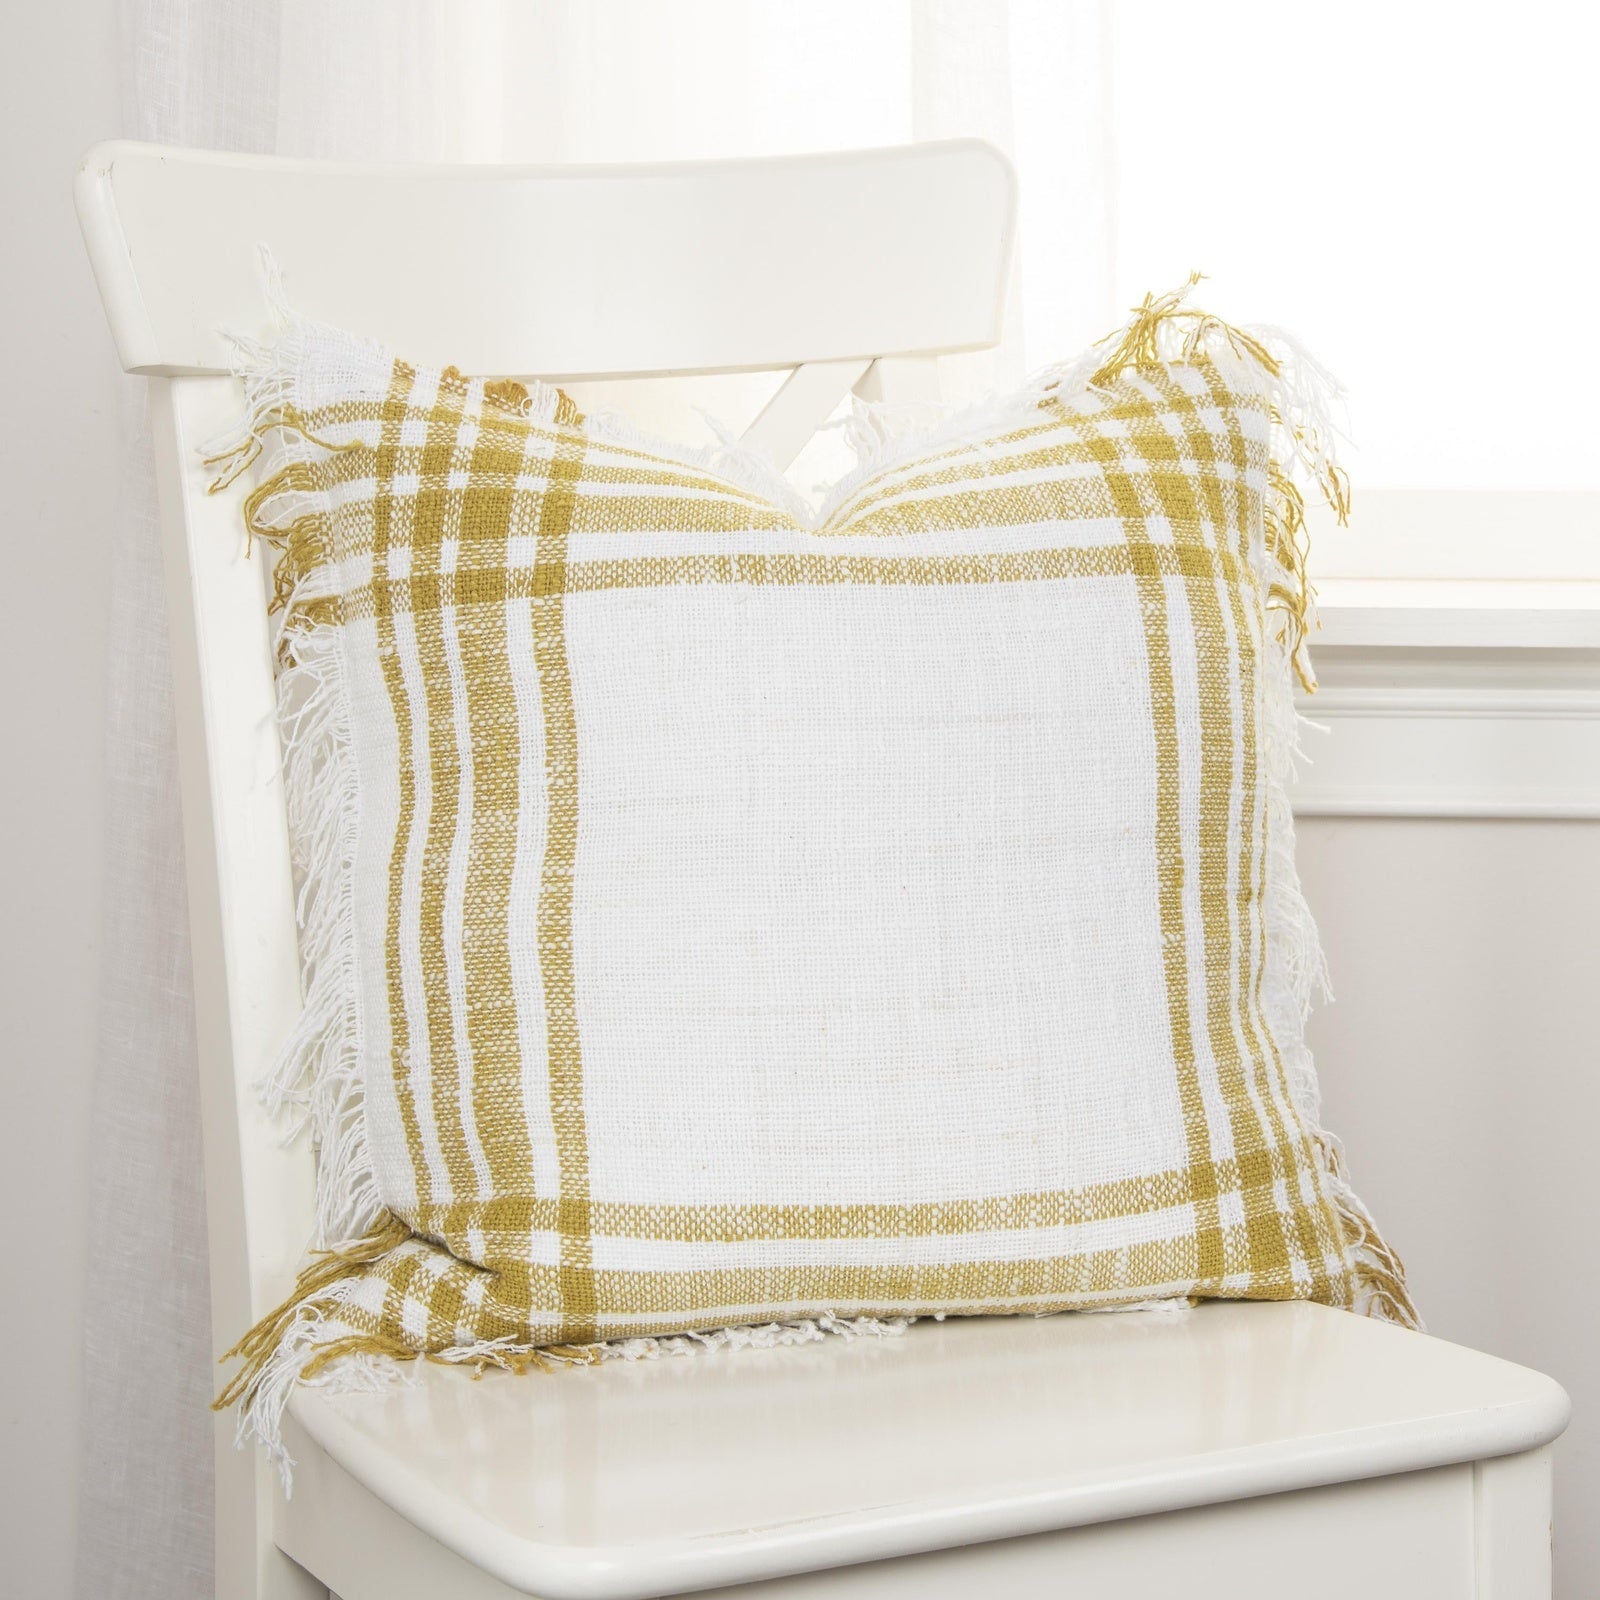 Woven Woven Cotton Plaid Decorative Throw Pillow - Decorative Pillows